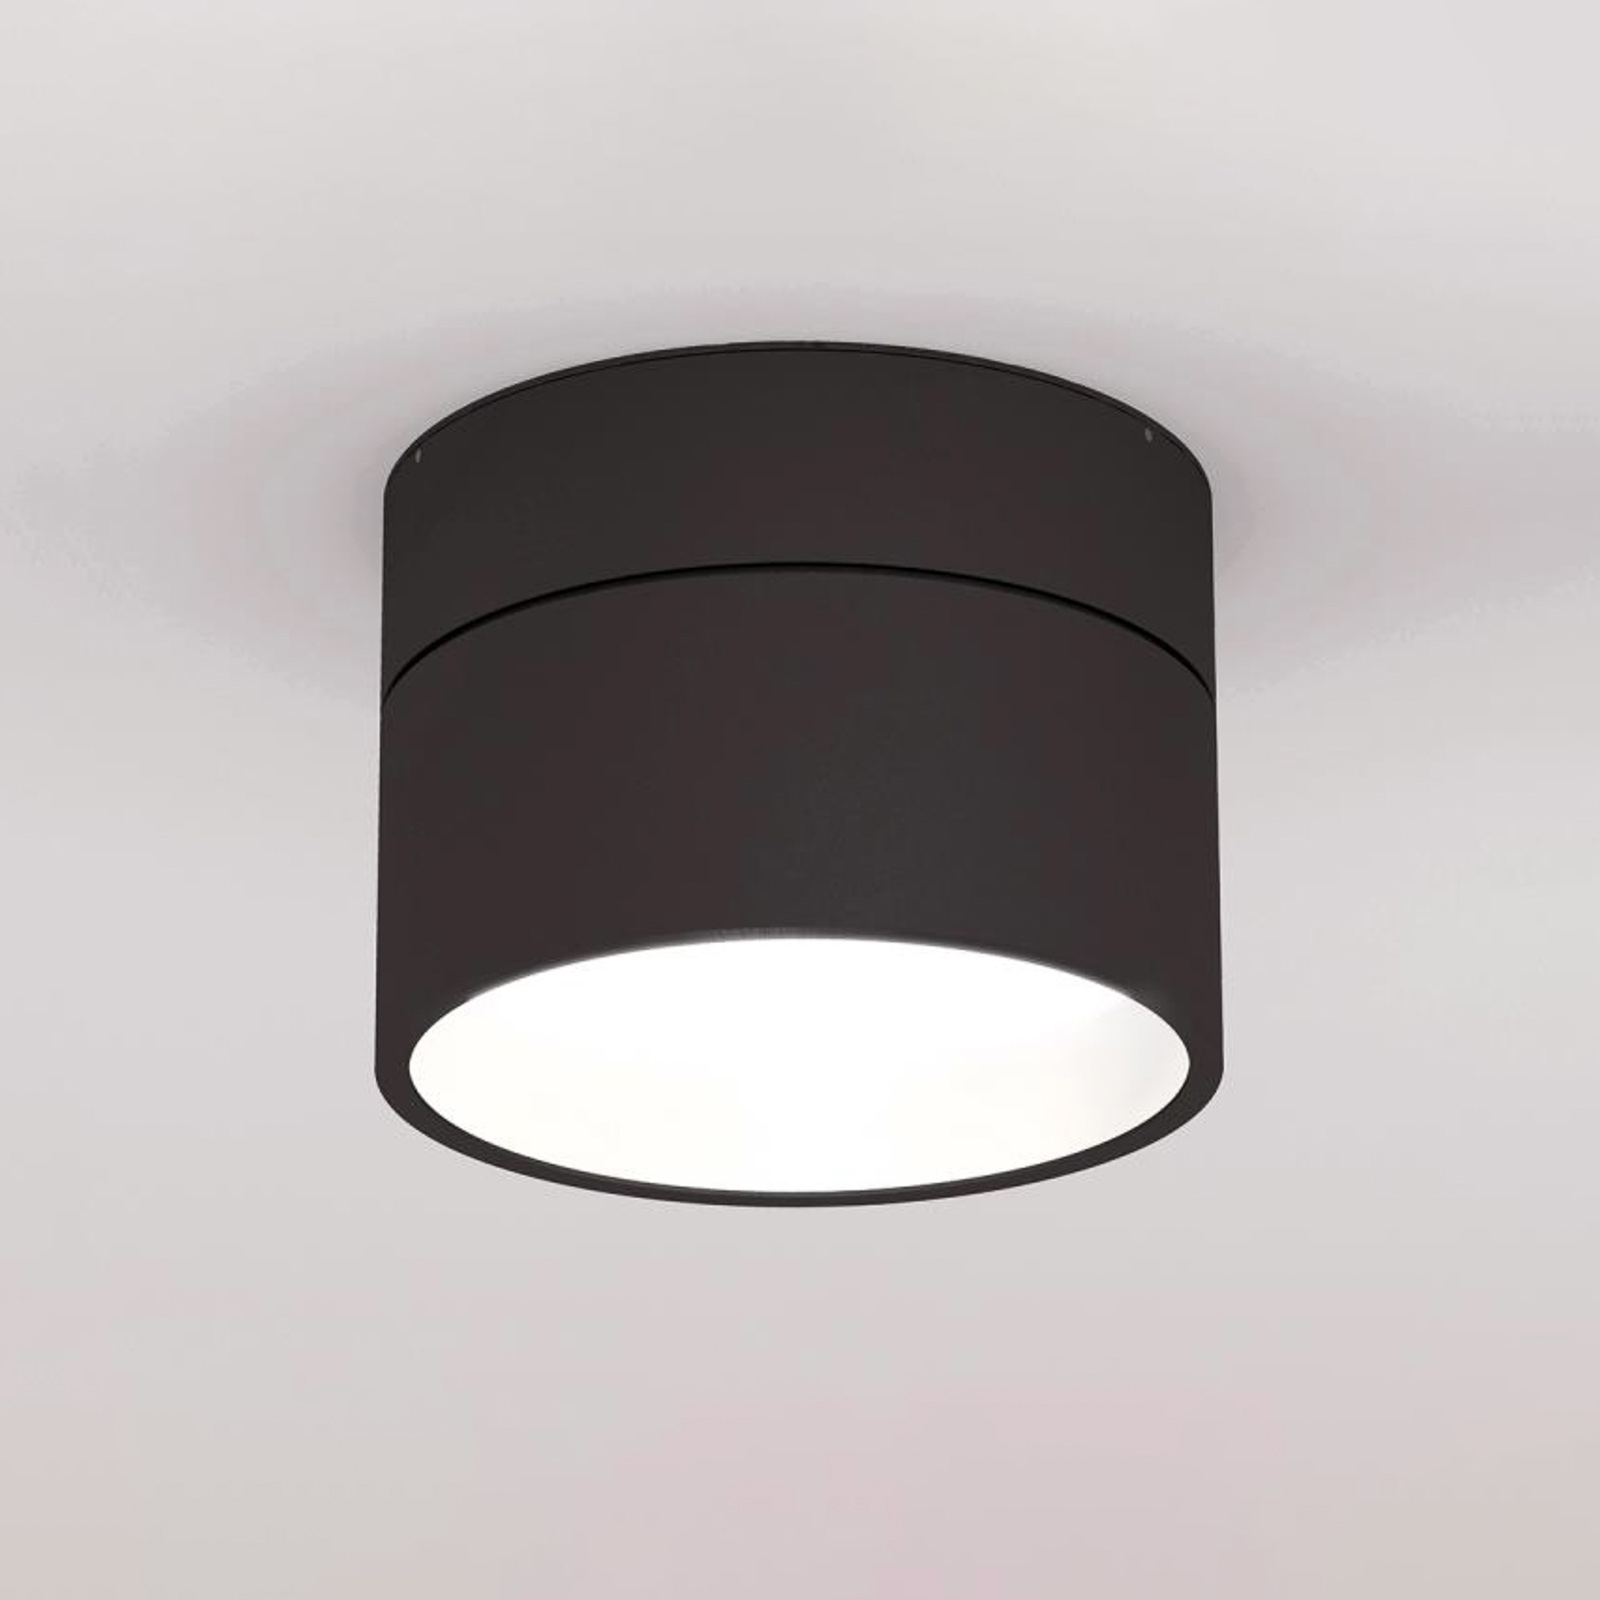 Turn on LED plafondlamp Dime 2700K zwart/wit